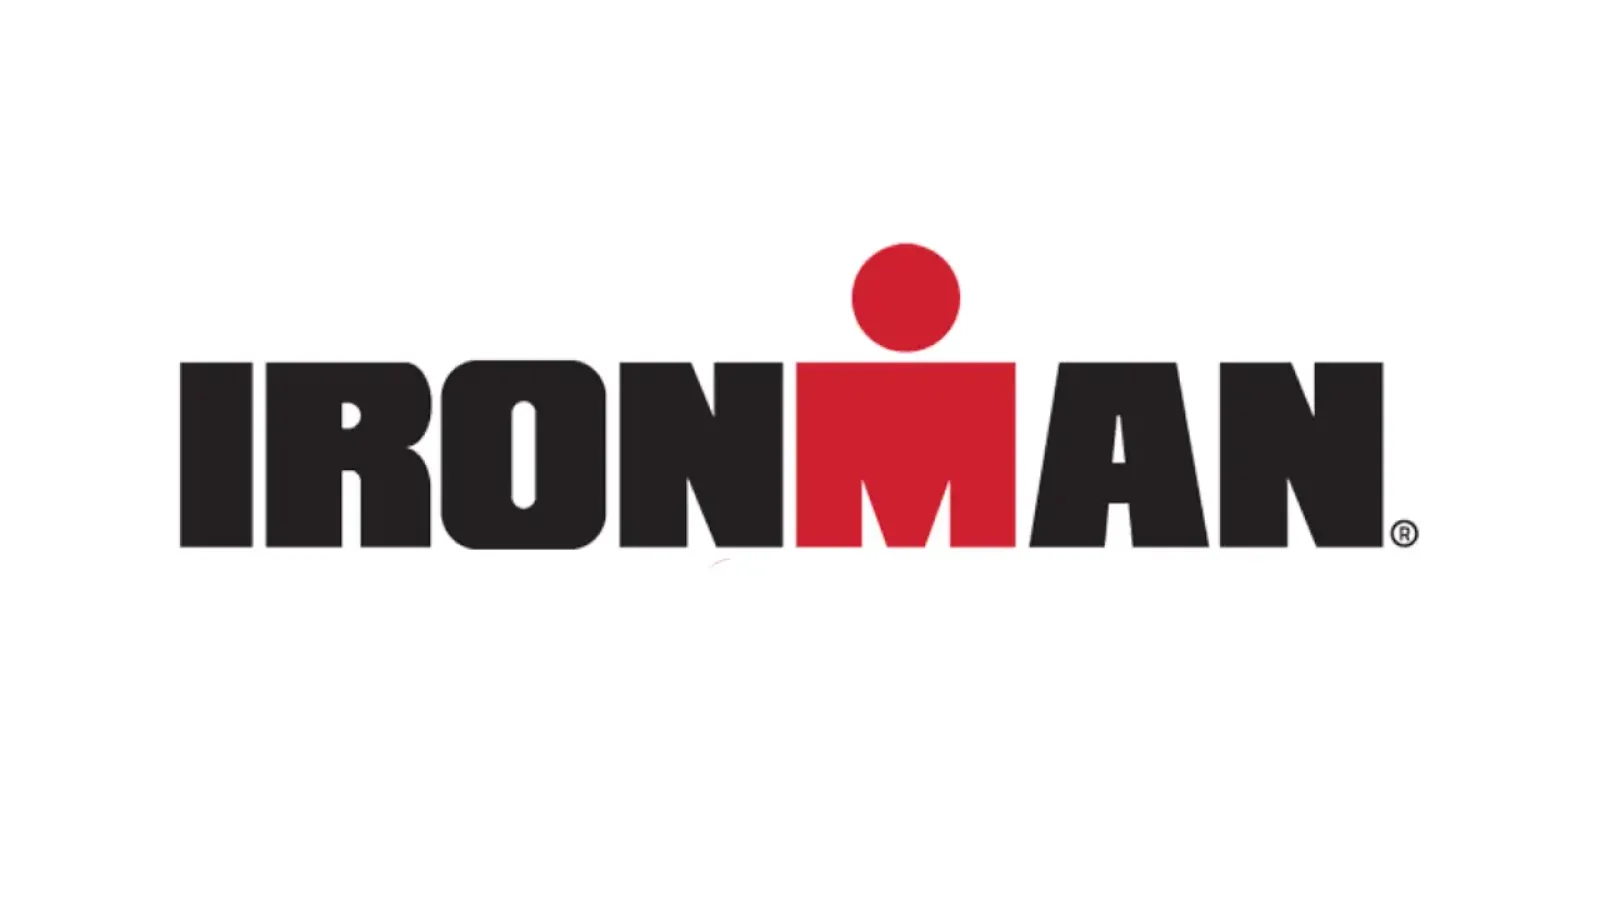 Ironman em Portugal